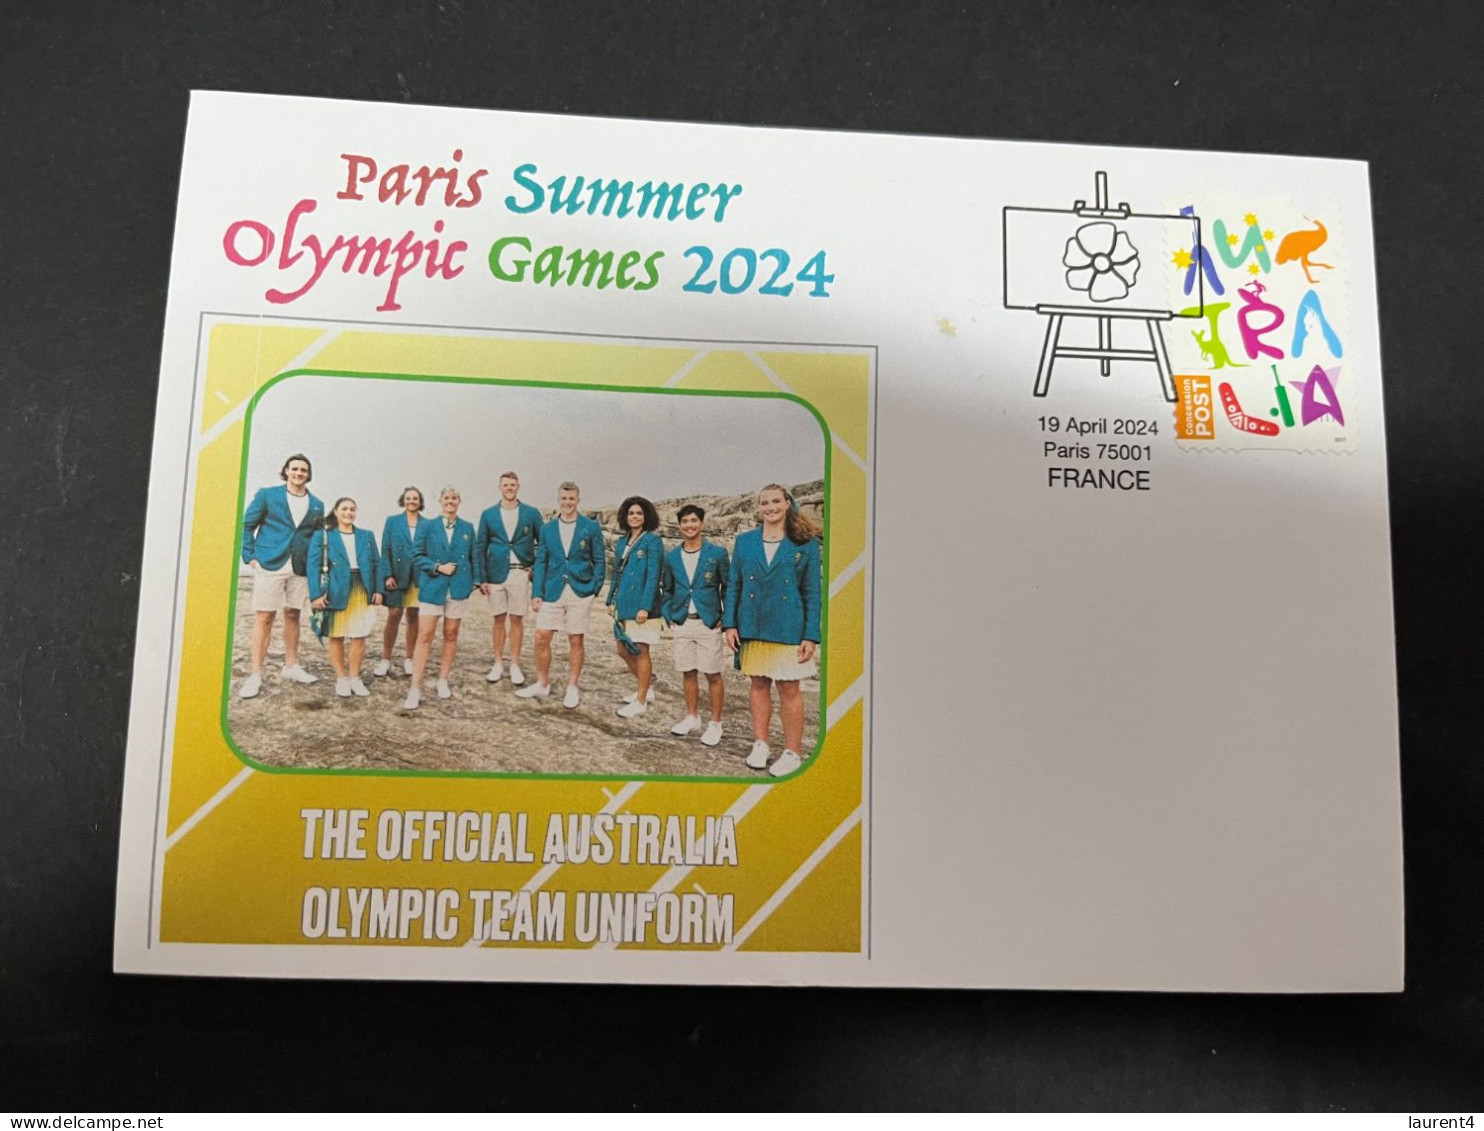 6-5-2024 (4 Z 17) Paris Olympic Games 2024 - Official Australia Olympic Team Uniform - Sommer 2024: Paris